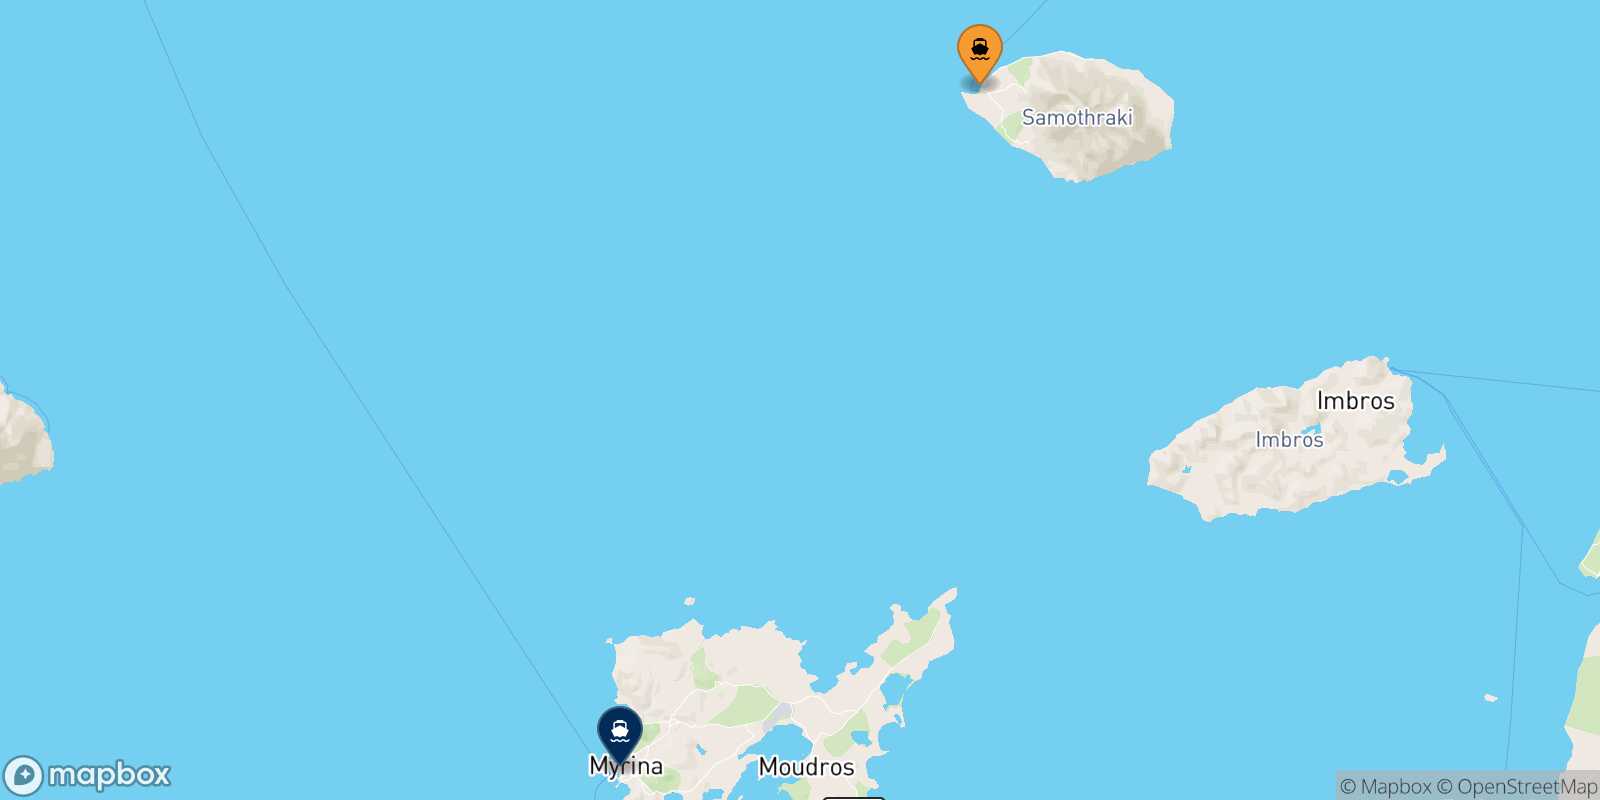 Samothraki Myrina (Limnos) route map